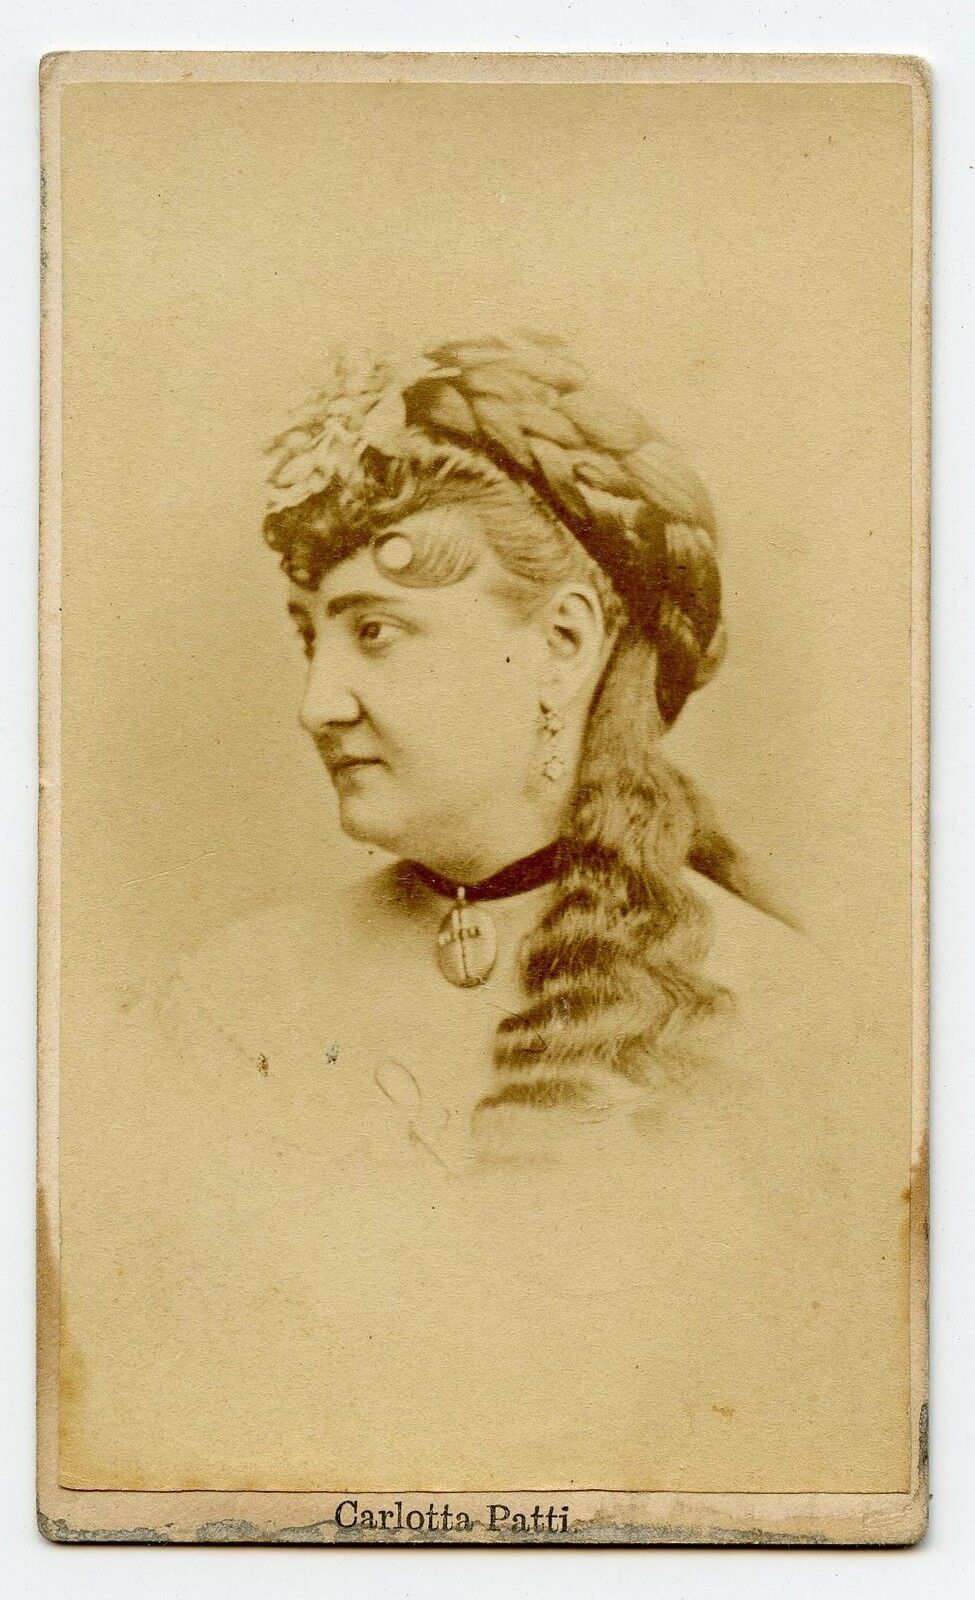 Opera Singer Carlotta Patti with Braided Hair, Vintage  Necklace, CDV Photo